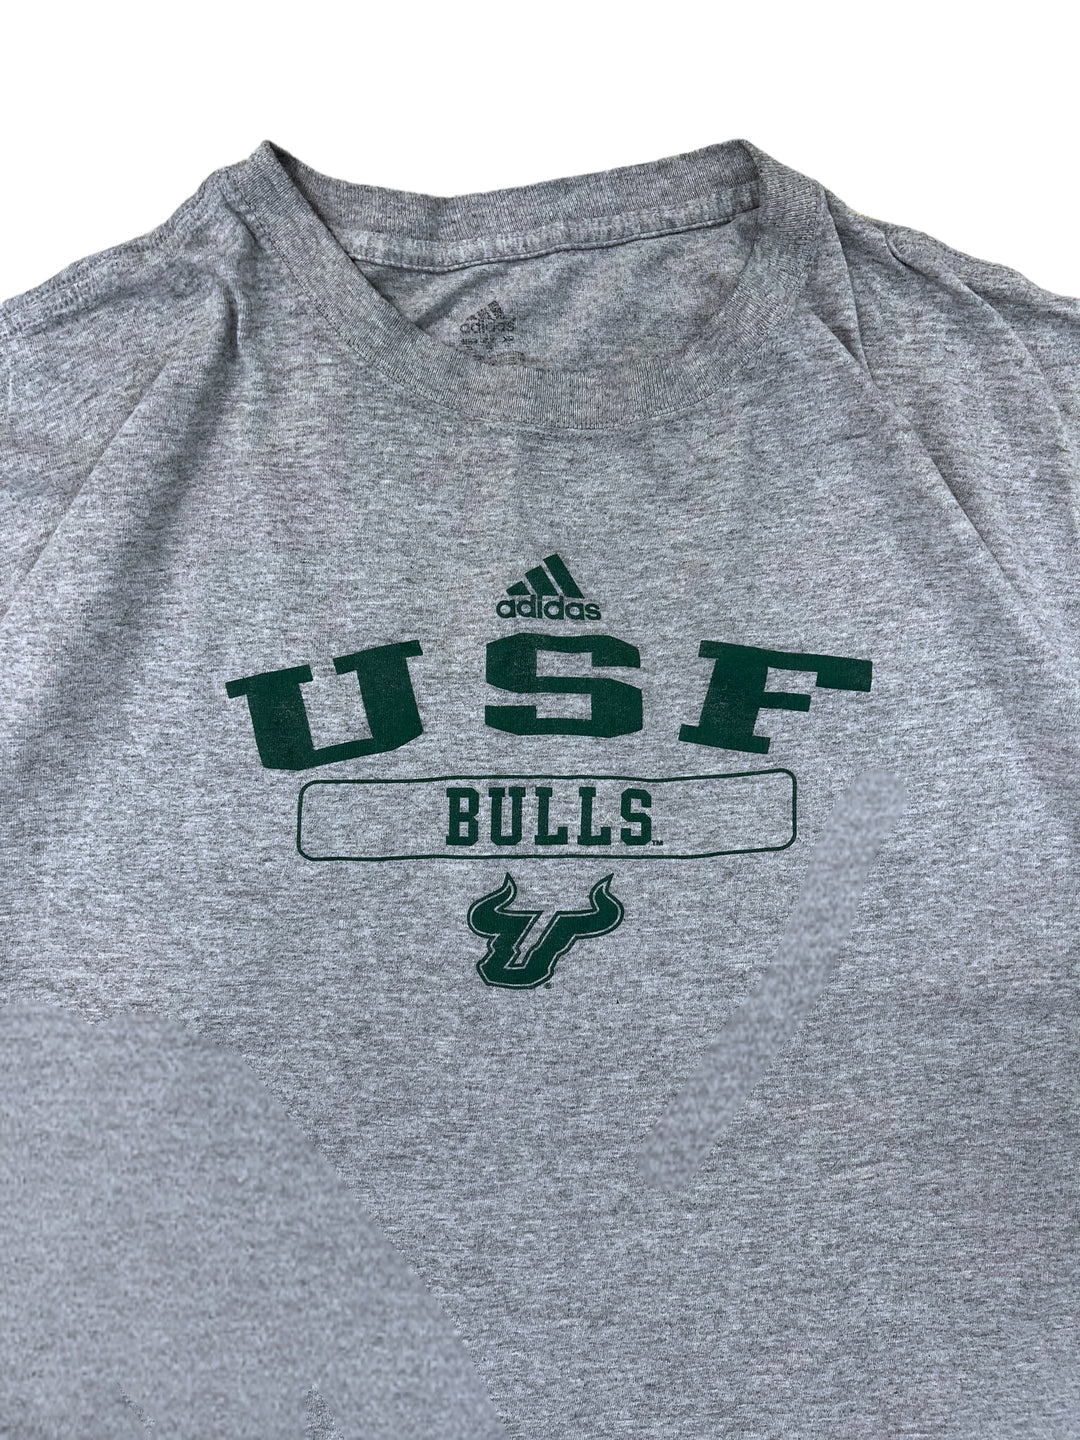 Adidas South Florida Bulls USF Football Tshirt men’s Extra Large